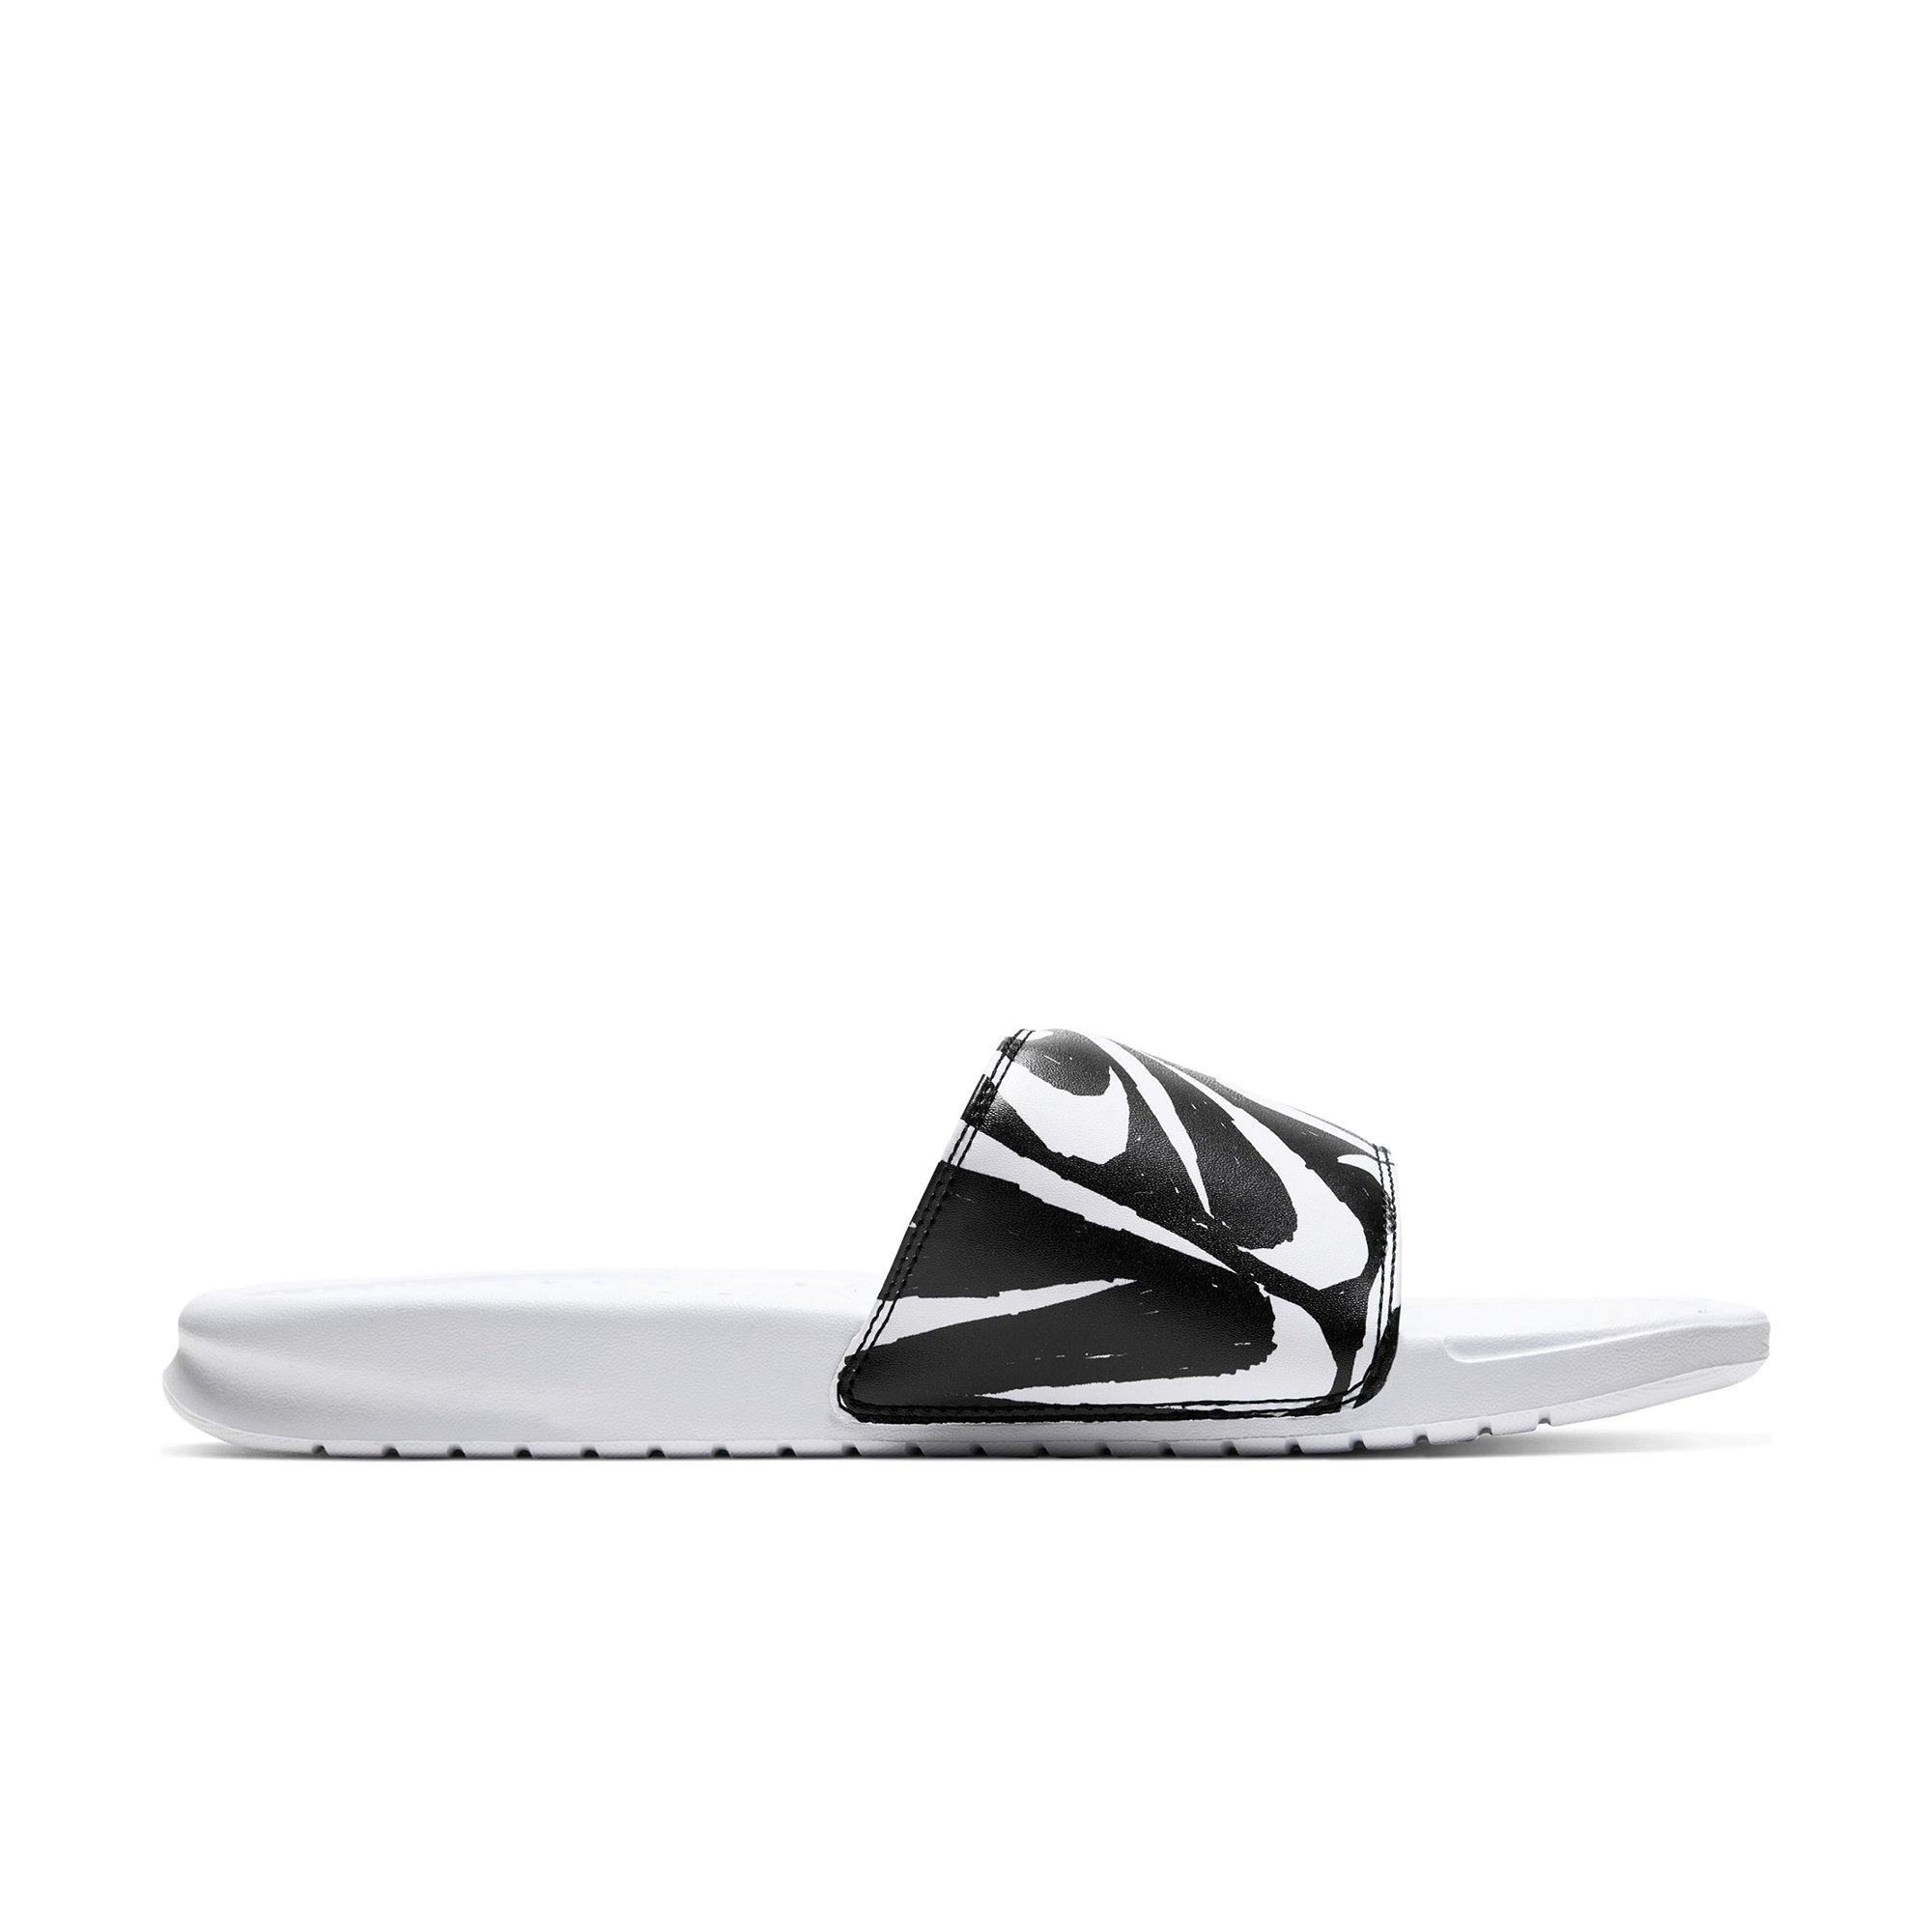 nike slippers black and white